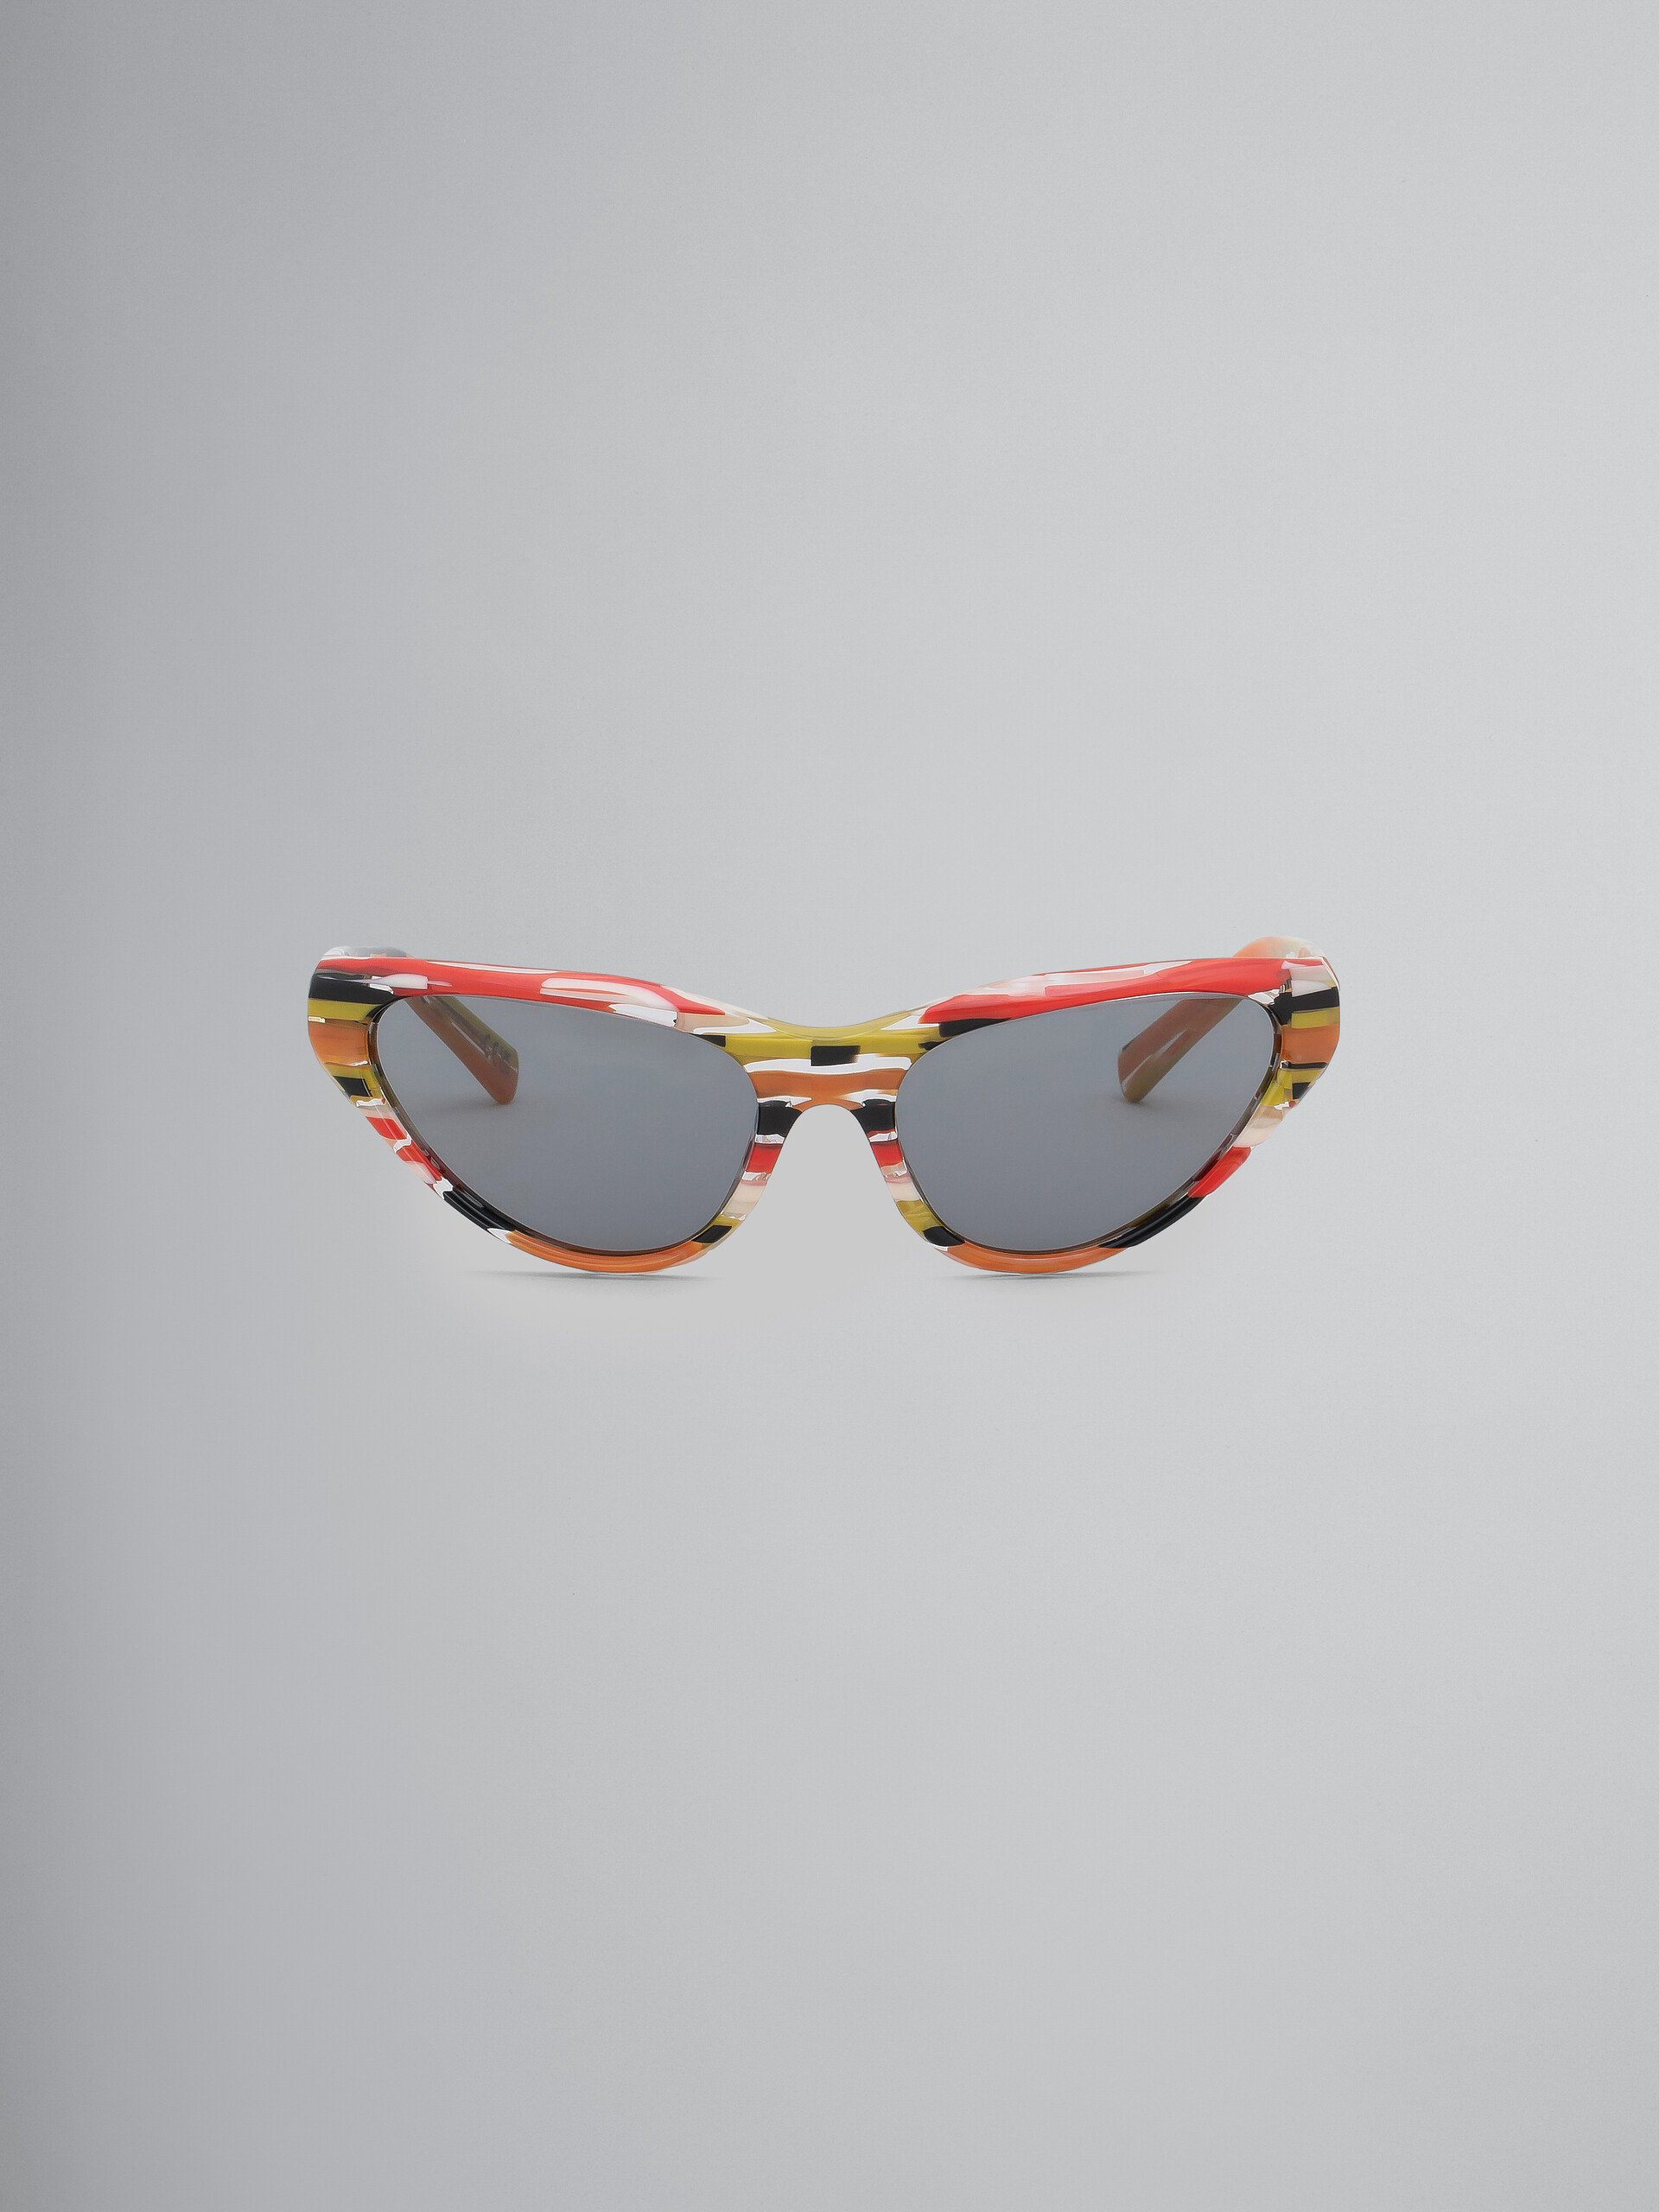 Starshell Mavericks sunglasses - Optical - Image 1